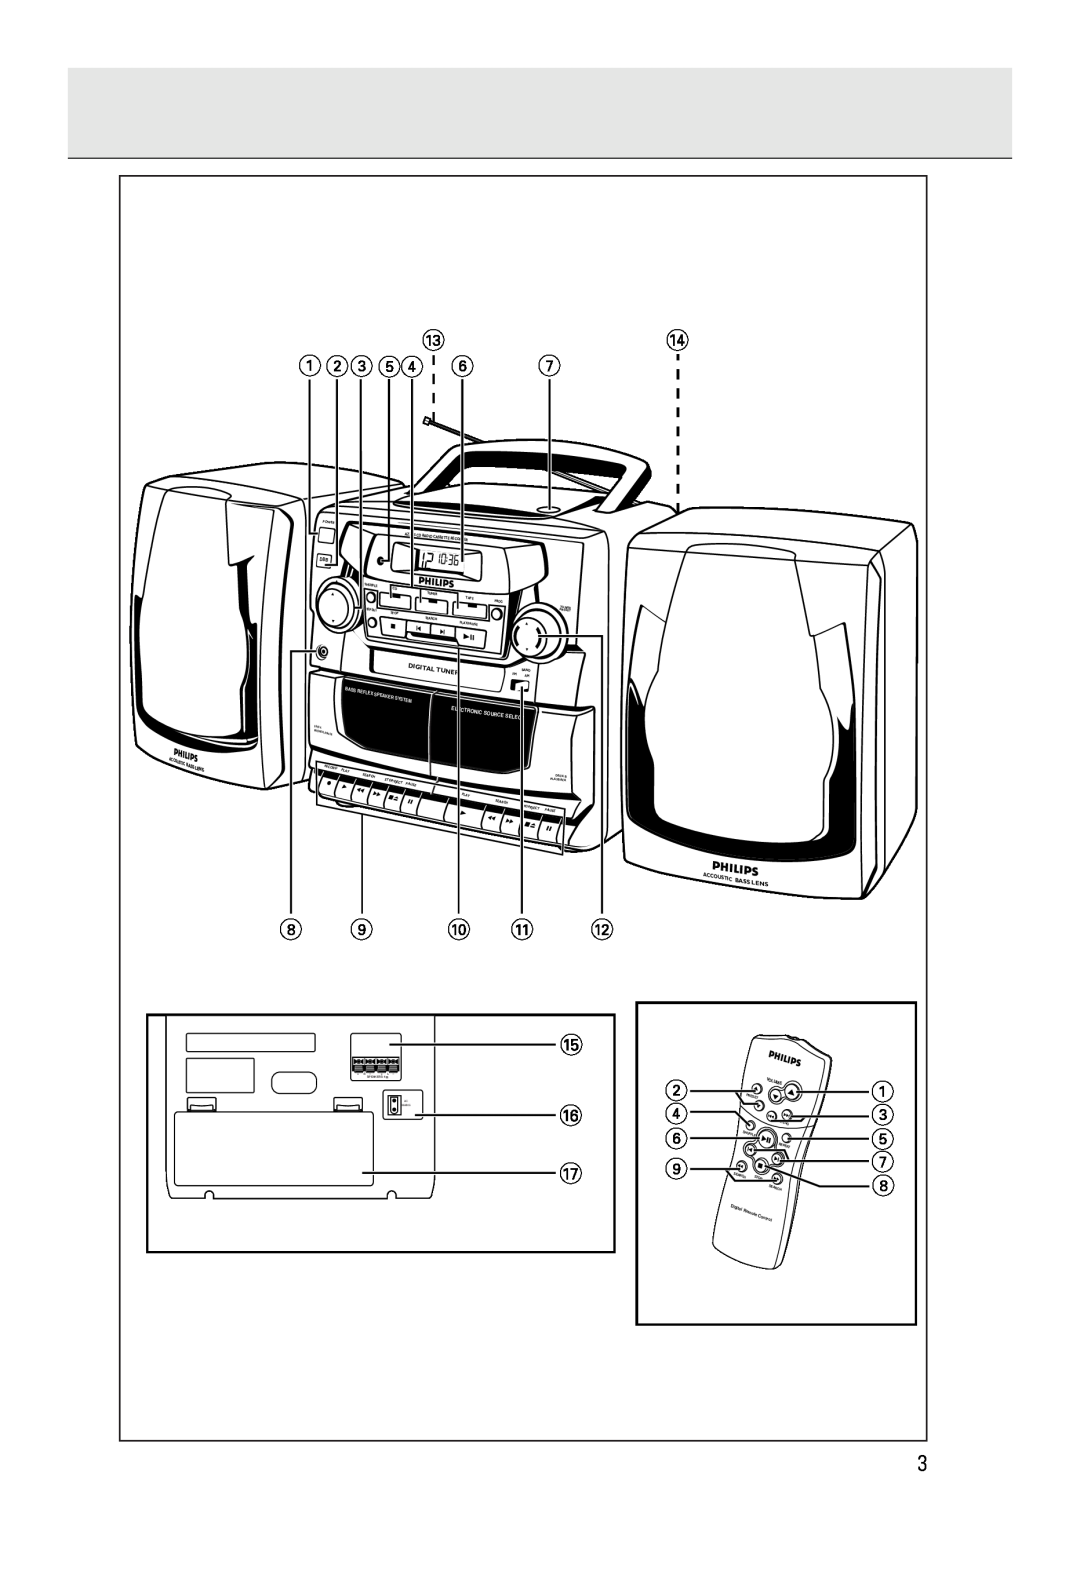 Philips AZ 2785 12354, Digital, Lens, Tuner, Bass, System, Source, Select, Volume, emote C, ontrol, Reflex, Speaker, Mains 